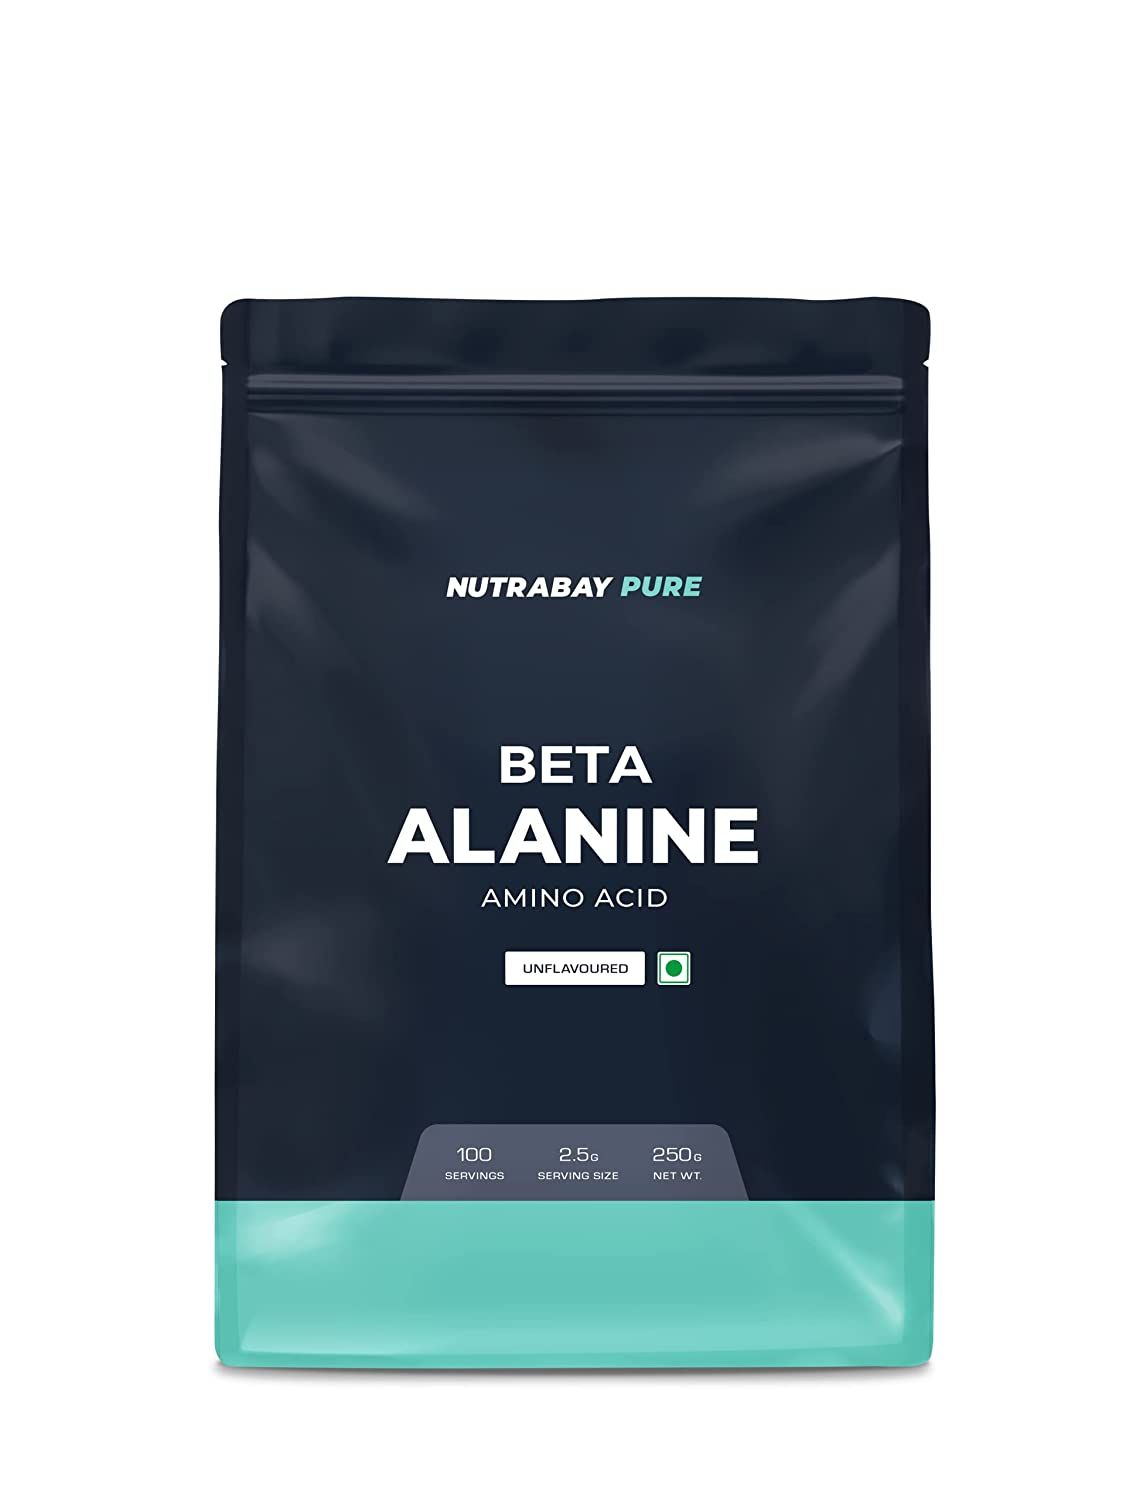 Nutrabay Pure Beta-Alanine Image